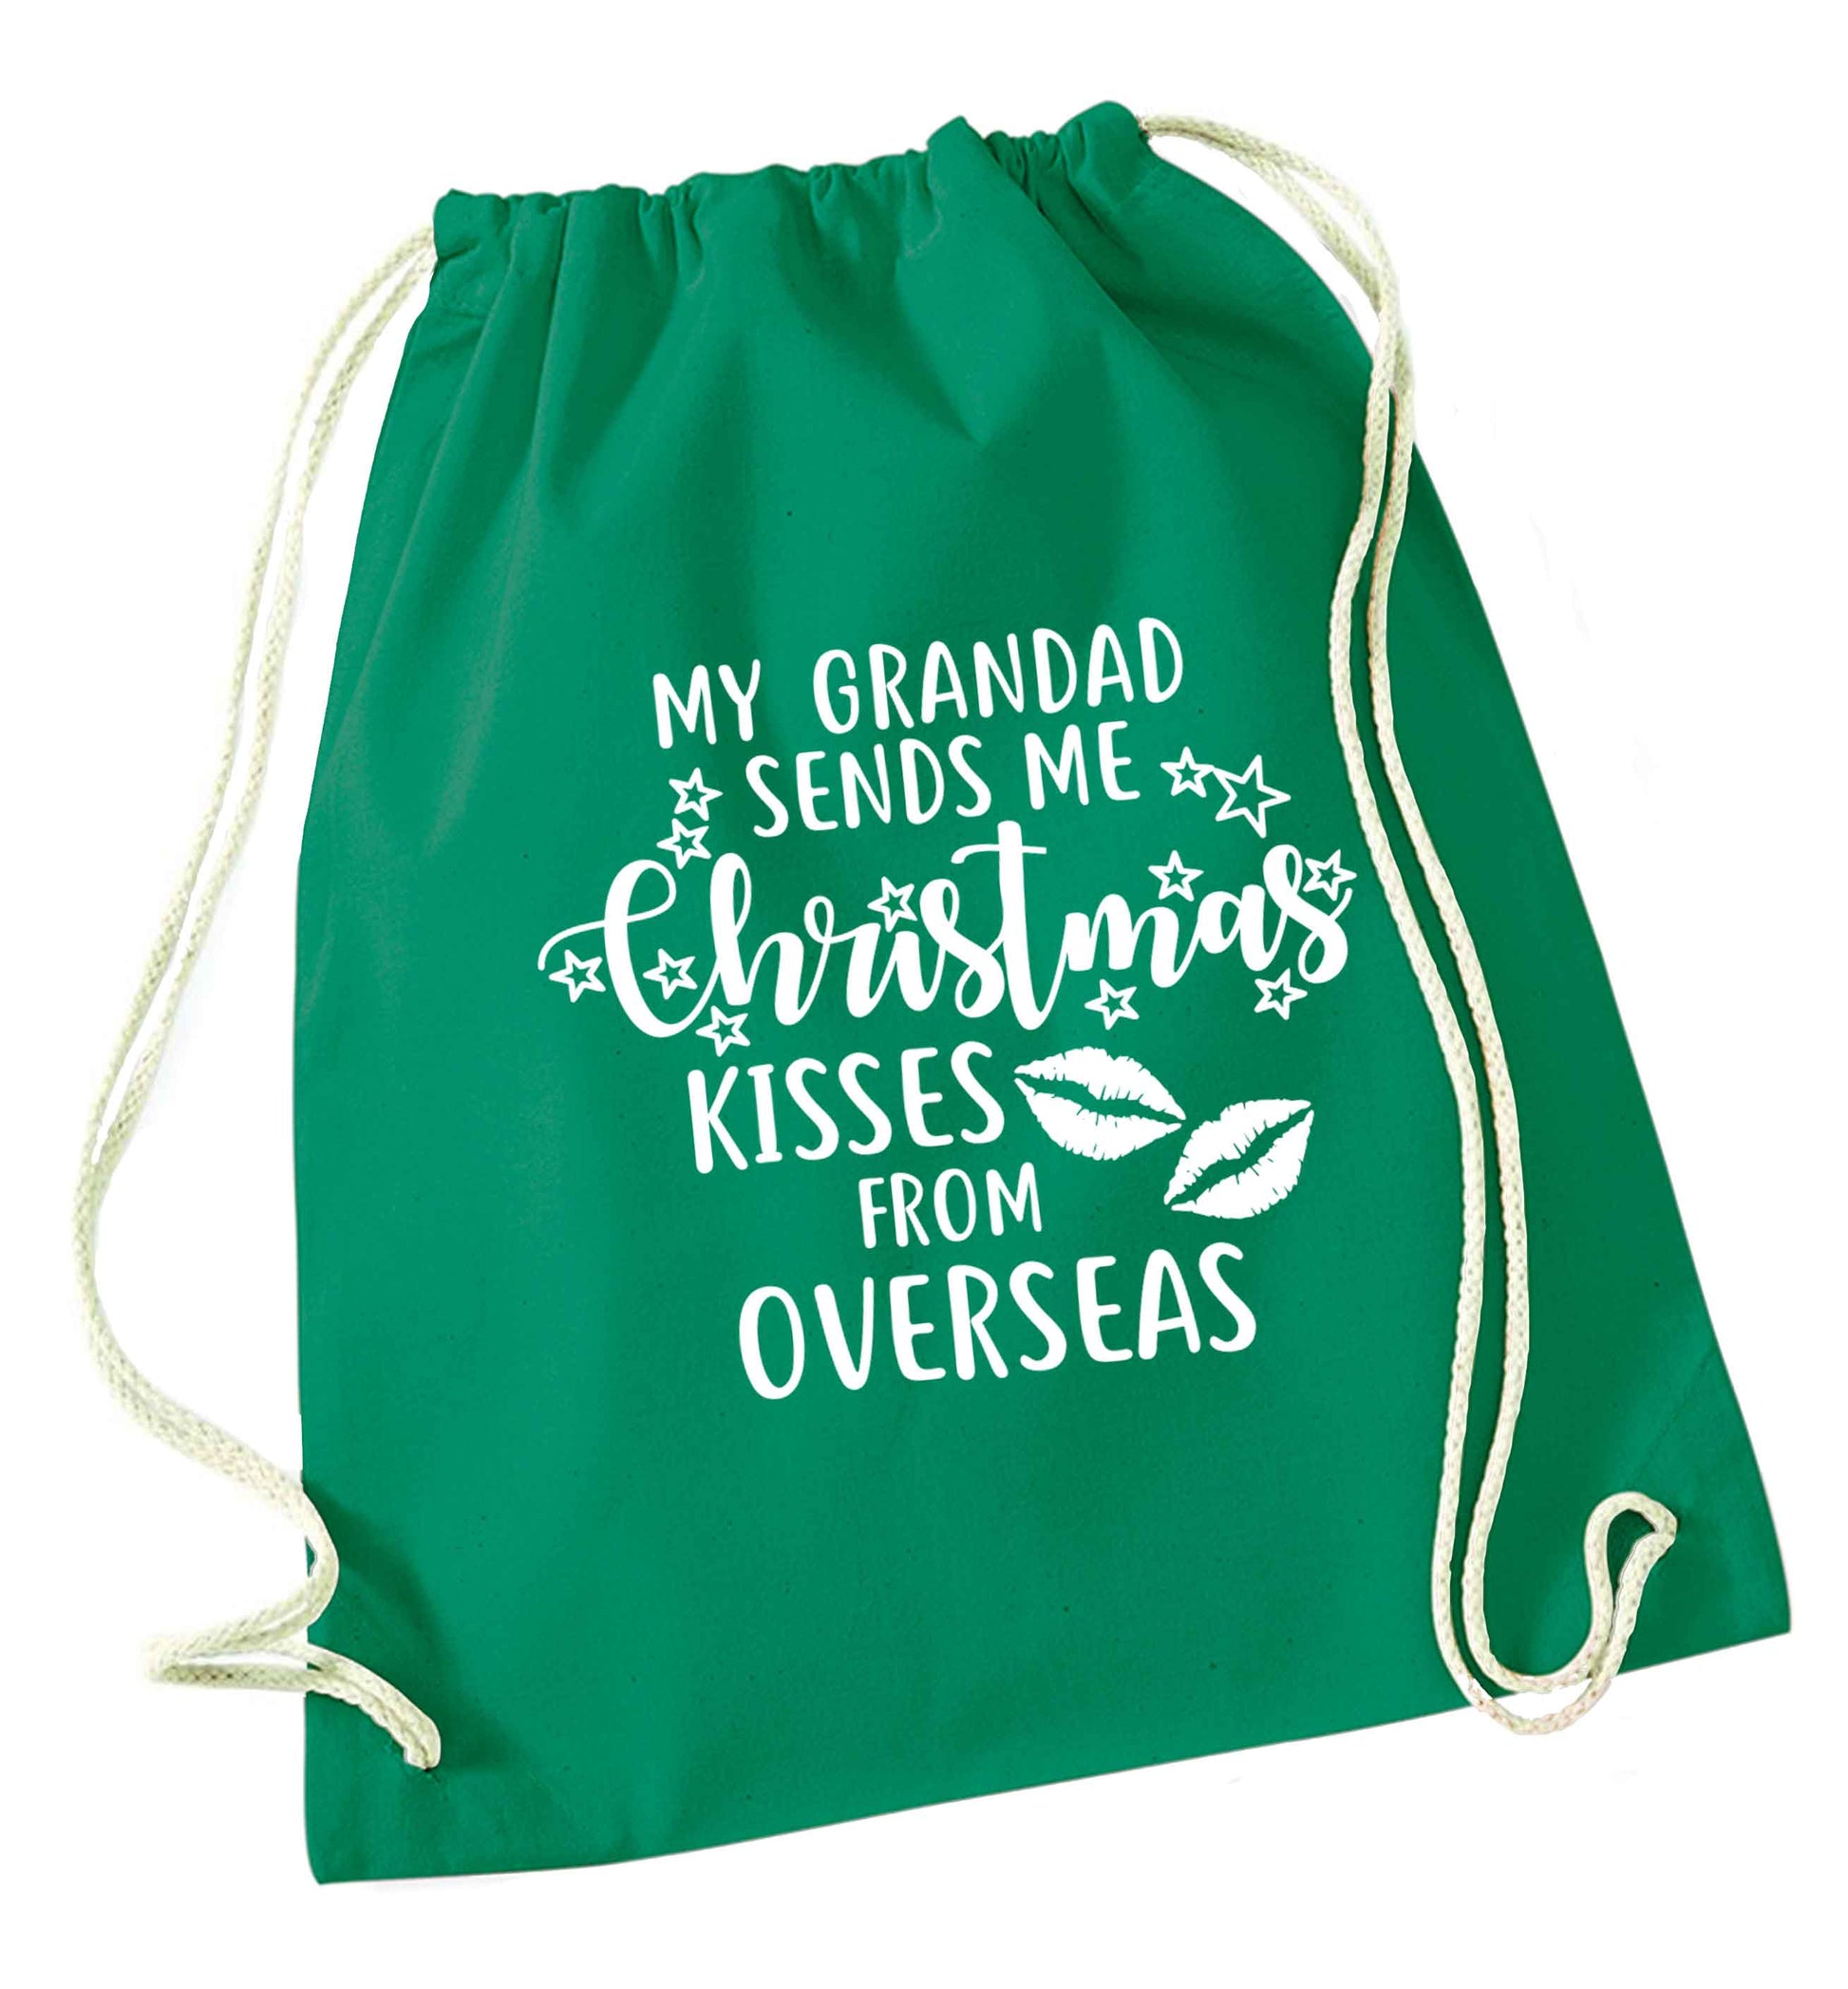 Grandad Christmas Kisses Overseas green drawstring bag